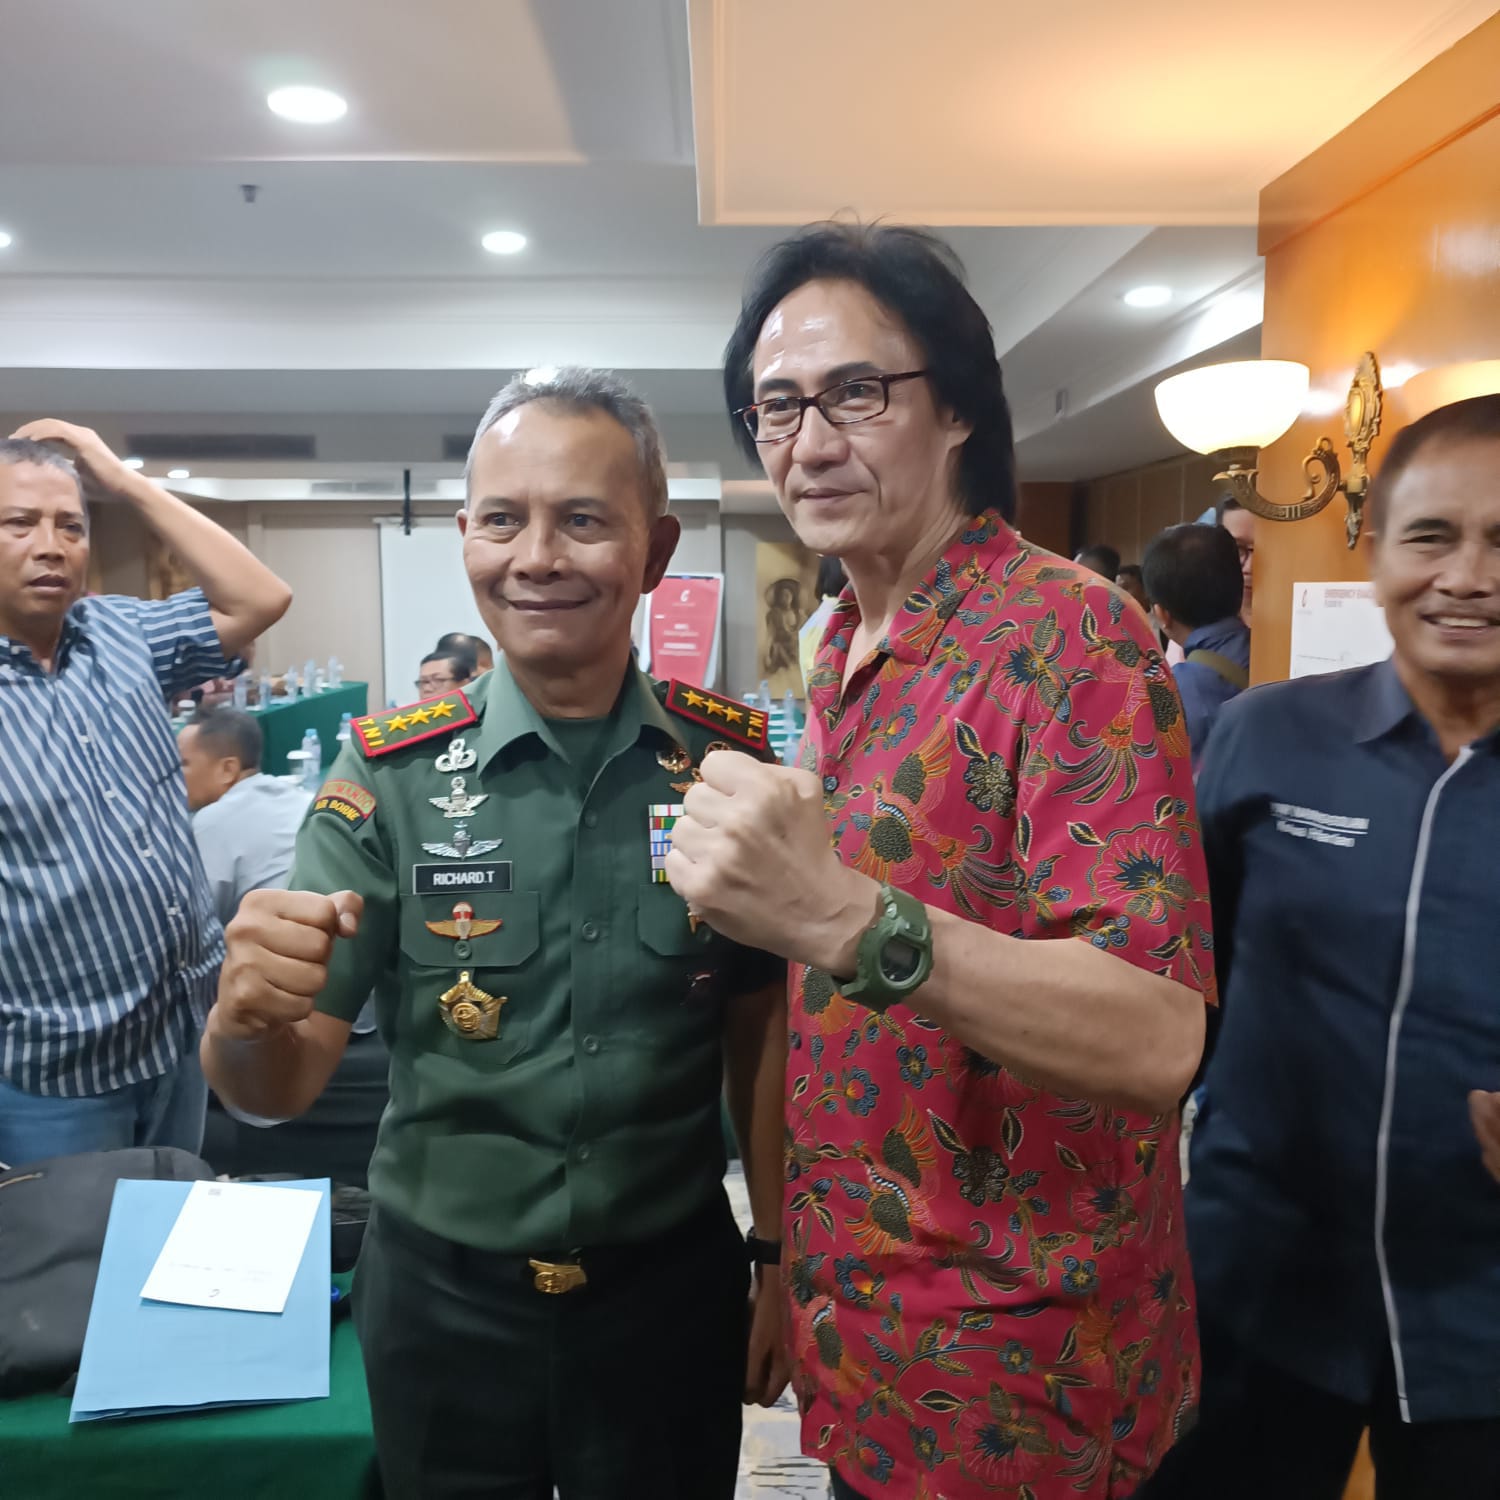 Kantongi dukungan 25 Pengprov, Letjen TNI Richard Tampubolon diatas Angin Kandidat Kuat Ketum PBTI Periode 2023-2027